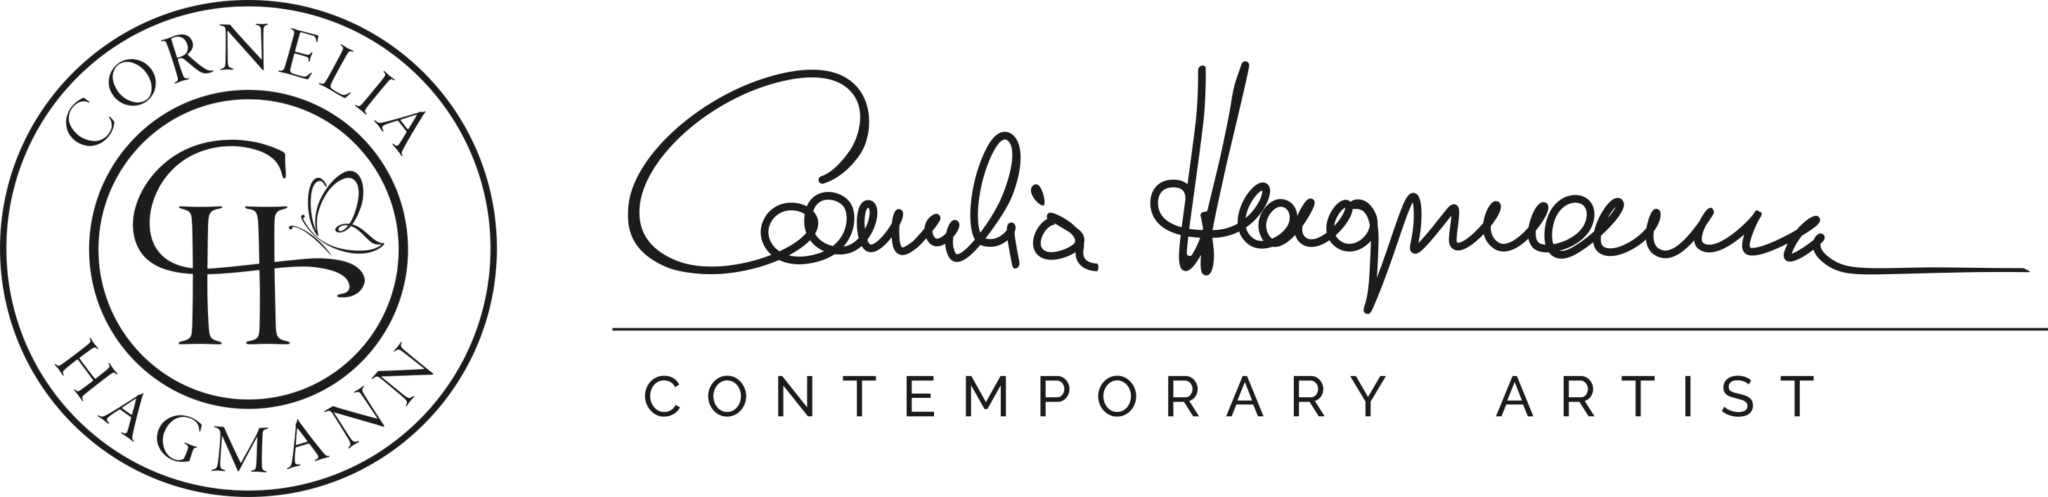 Logo Brand Cornelia Hagmann horizontal